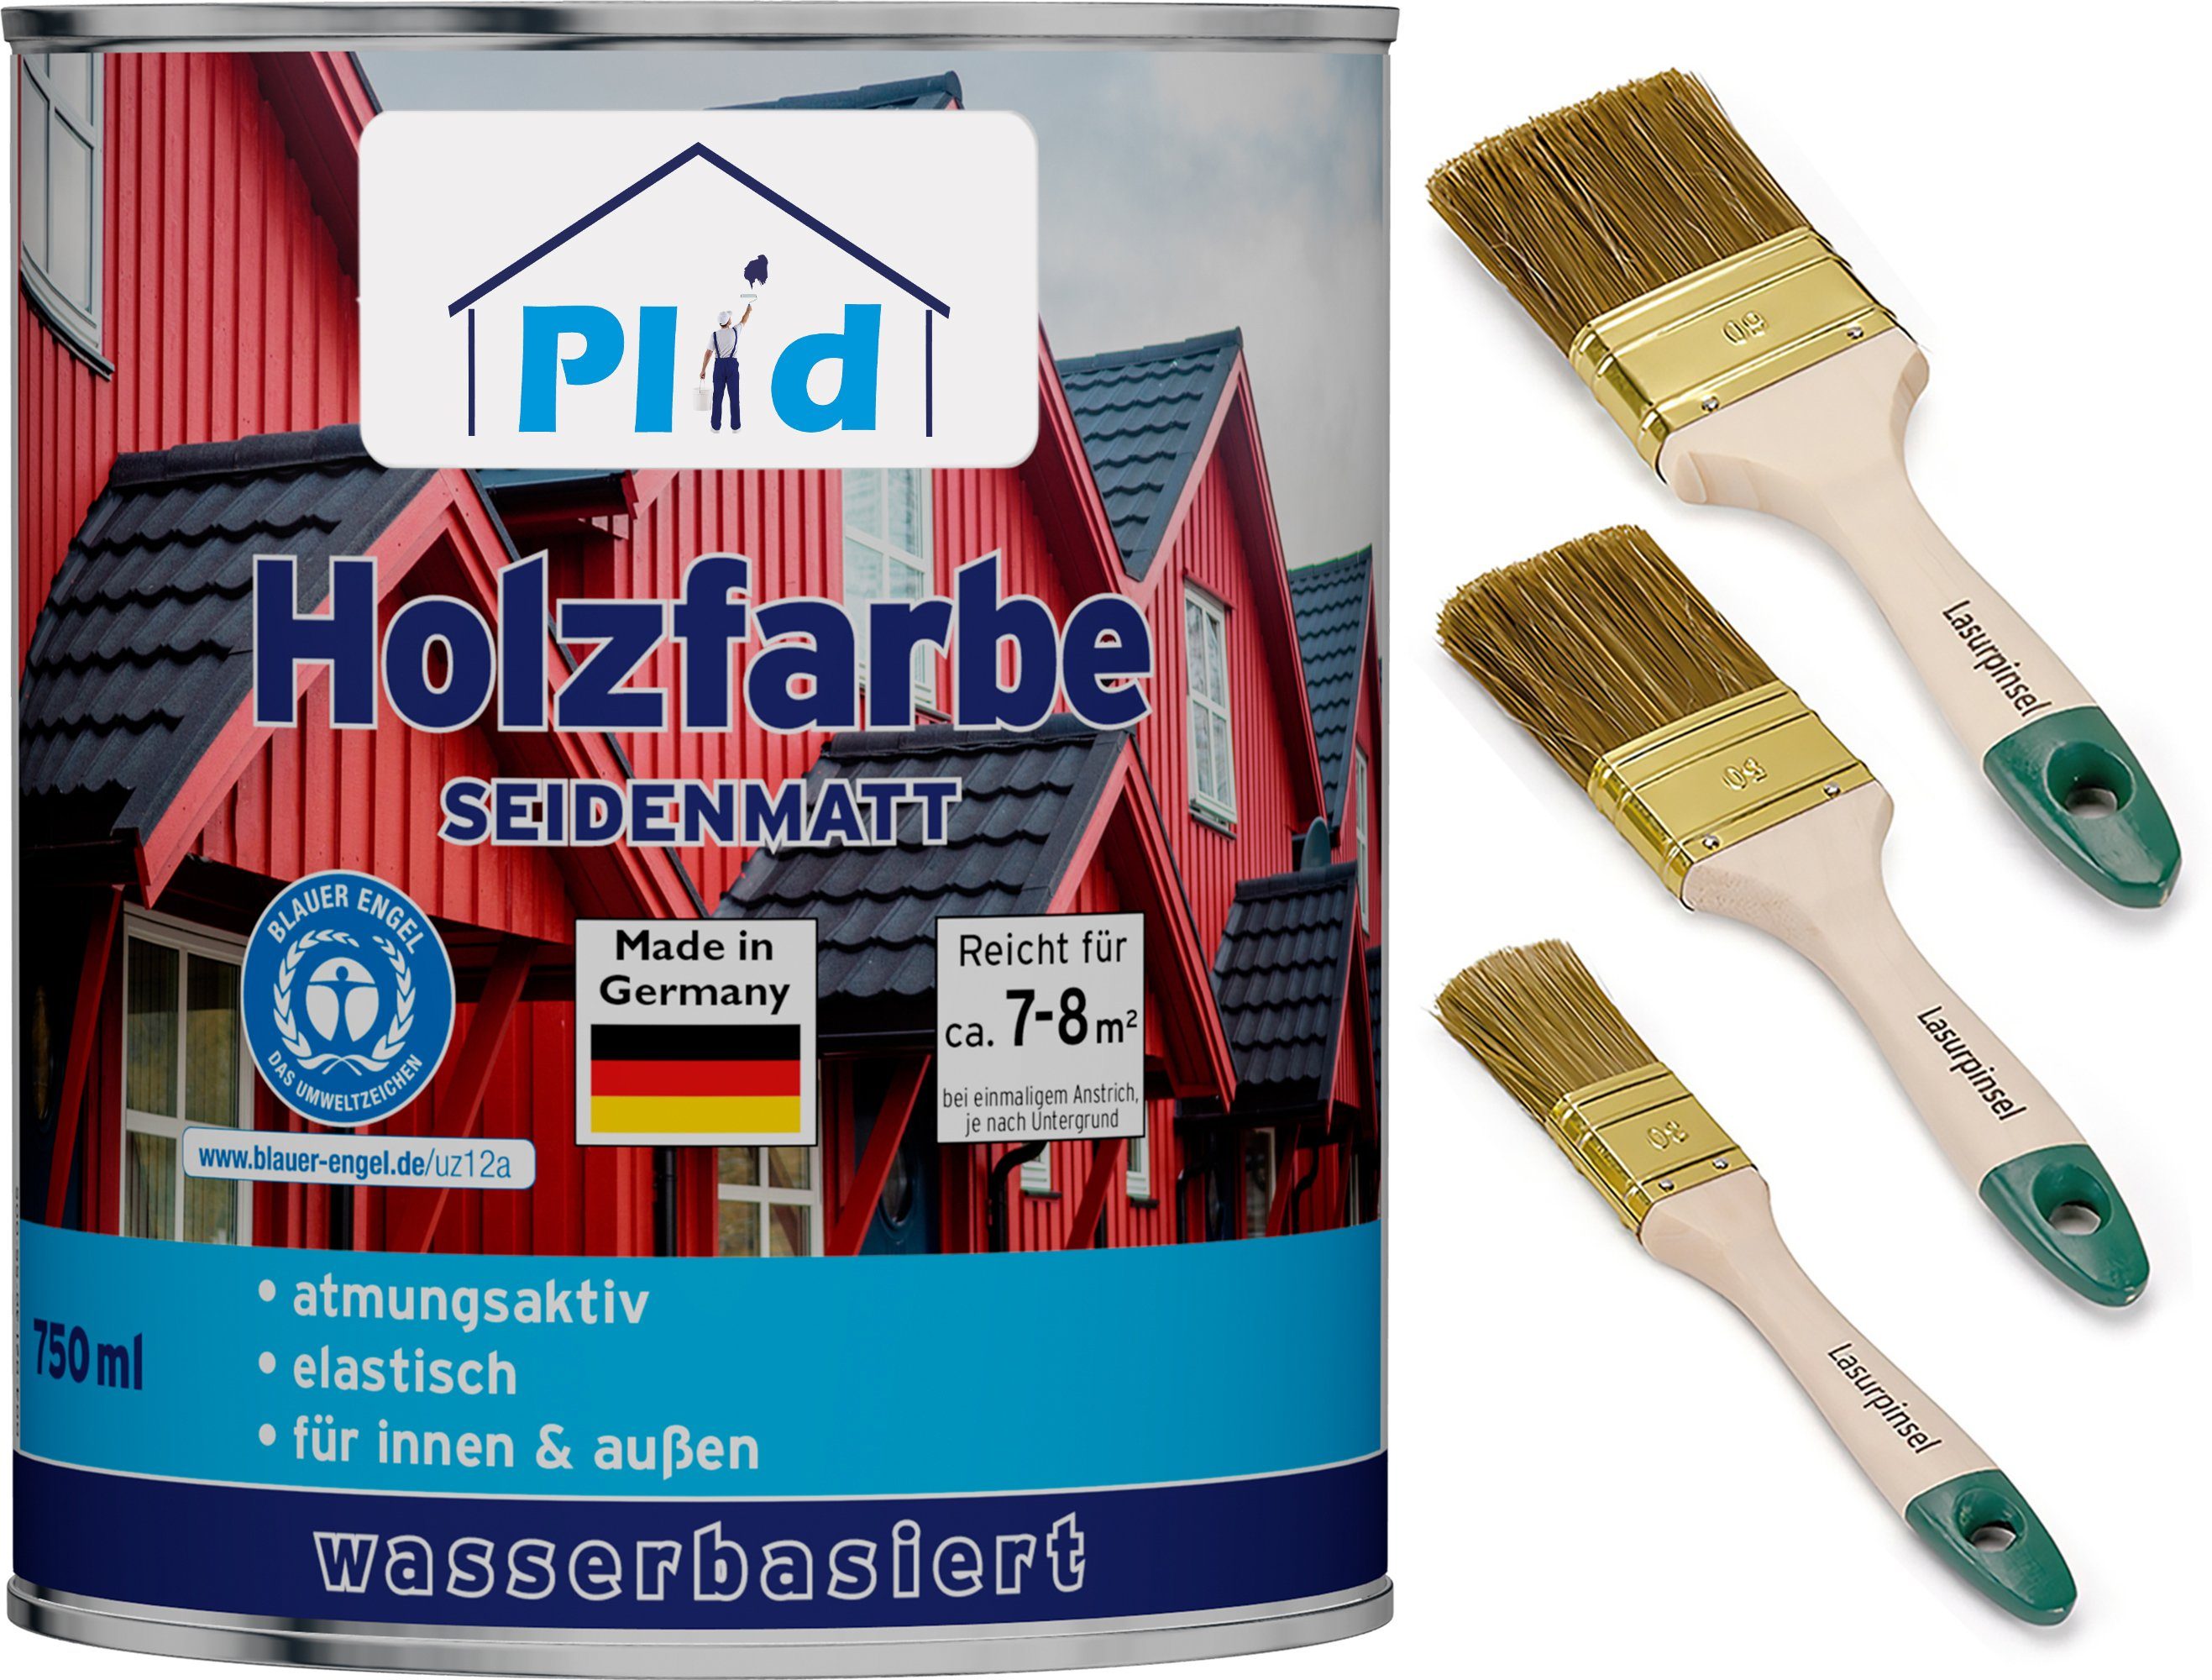 plid Holzlack Premium Holzfarbe Holzlack Farbe für Holz Pinsel, Schnelltrocknend, verarbeitungsfertig Anthrazitgrau